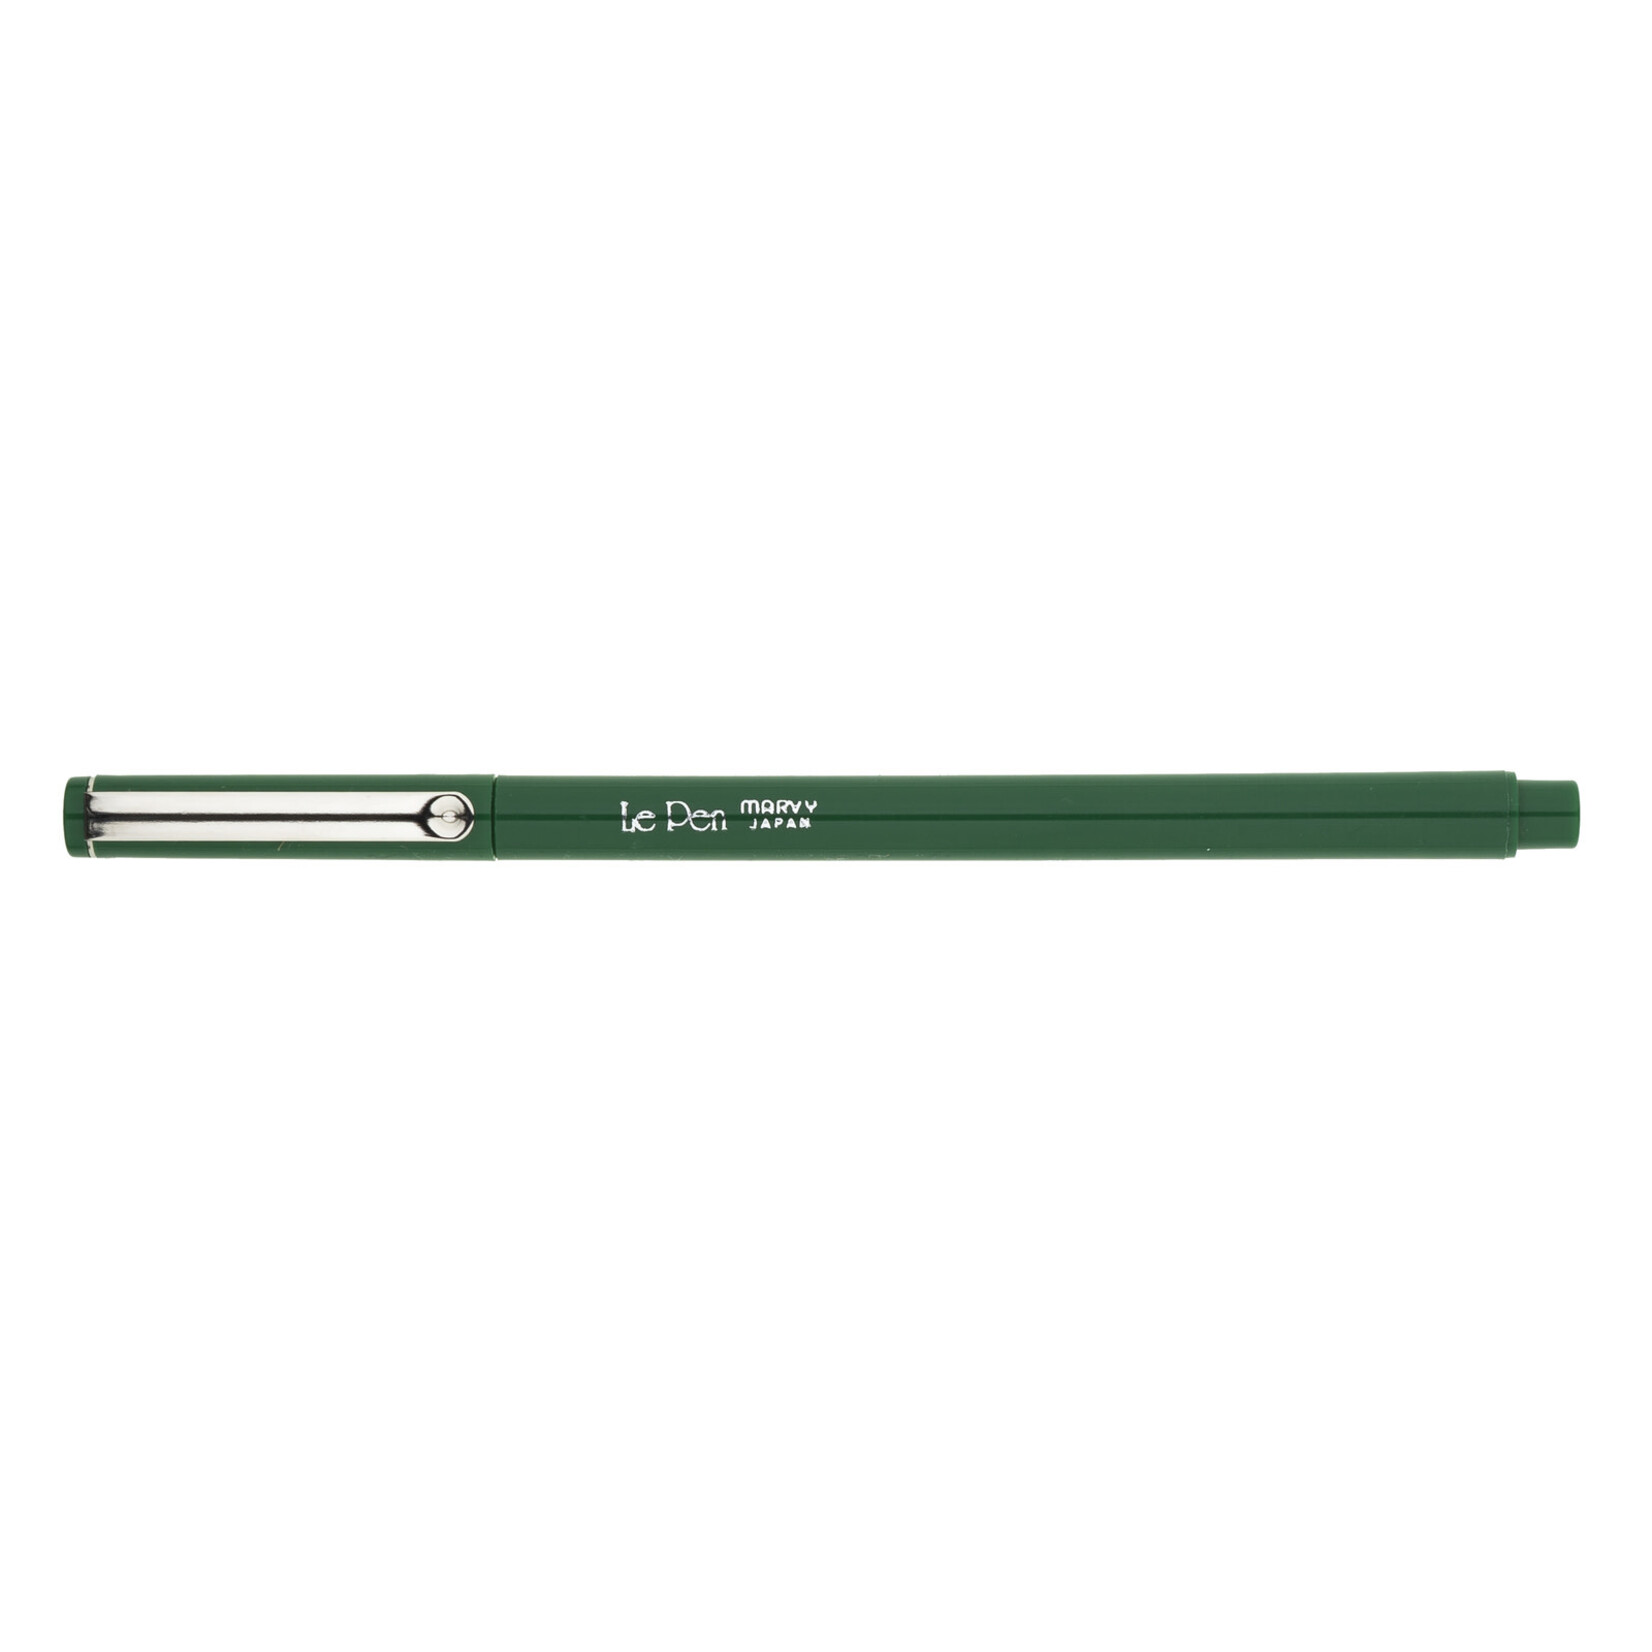 Uchida Le Pen Marker Green .3mm